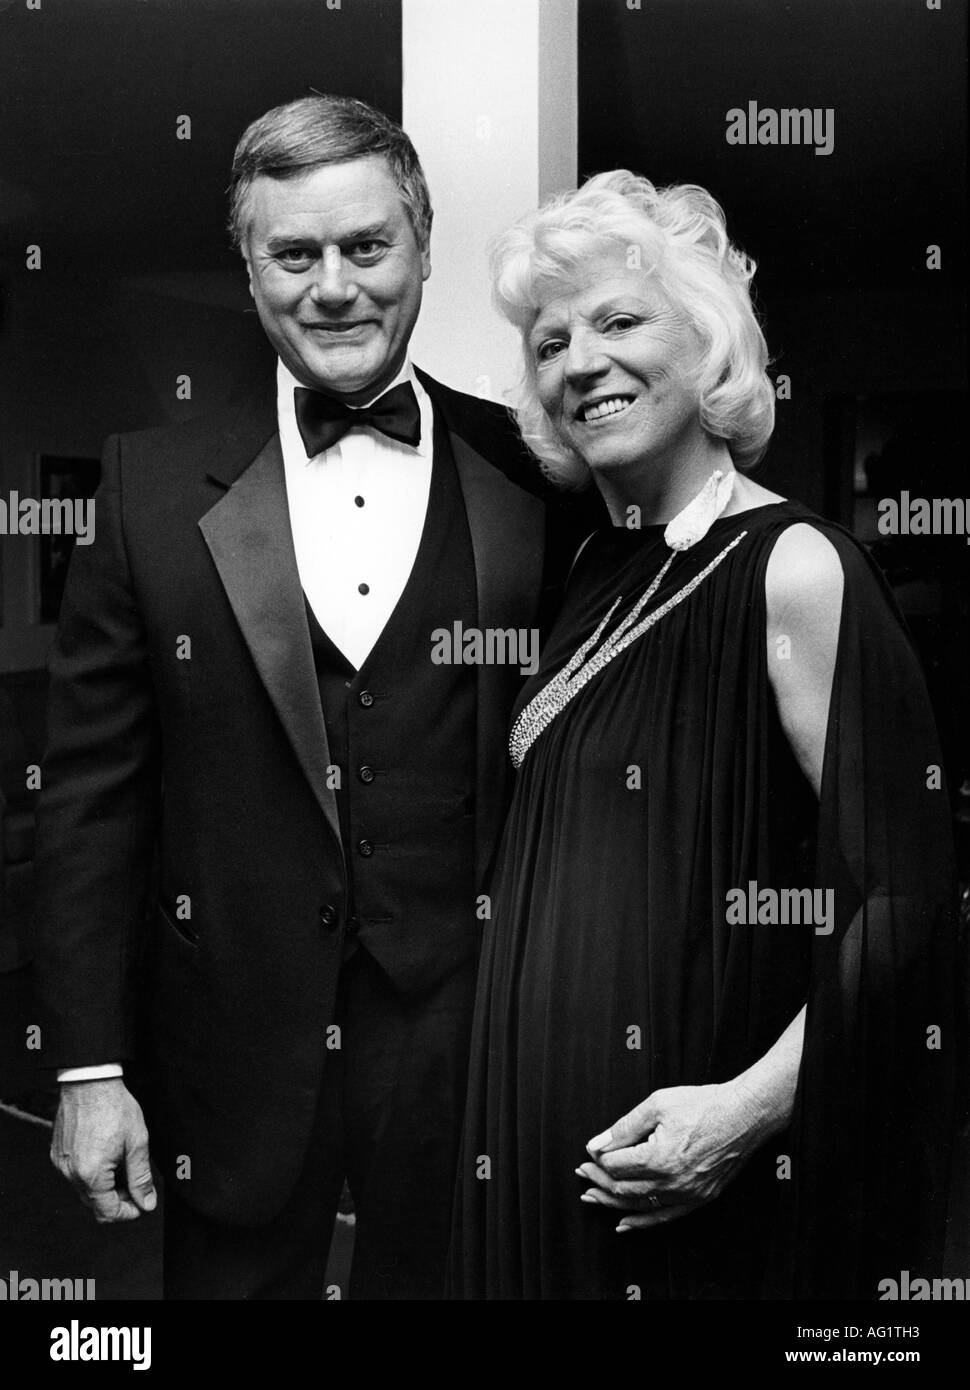 Hagman, Larry, 21.9.1931 - 23.11.2012, American actor, with wife Maj Axelsson, half length, hotel four seasons, Munich, 15.4.1983, Stock Photo